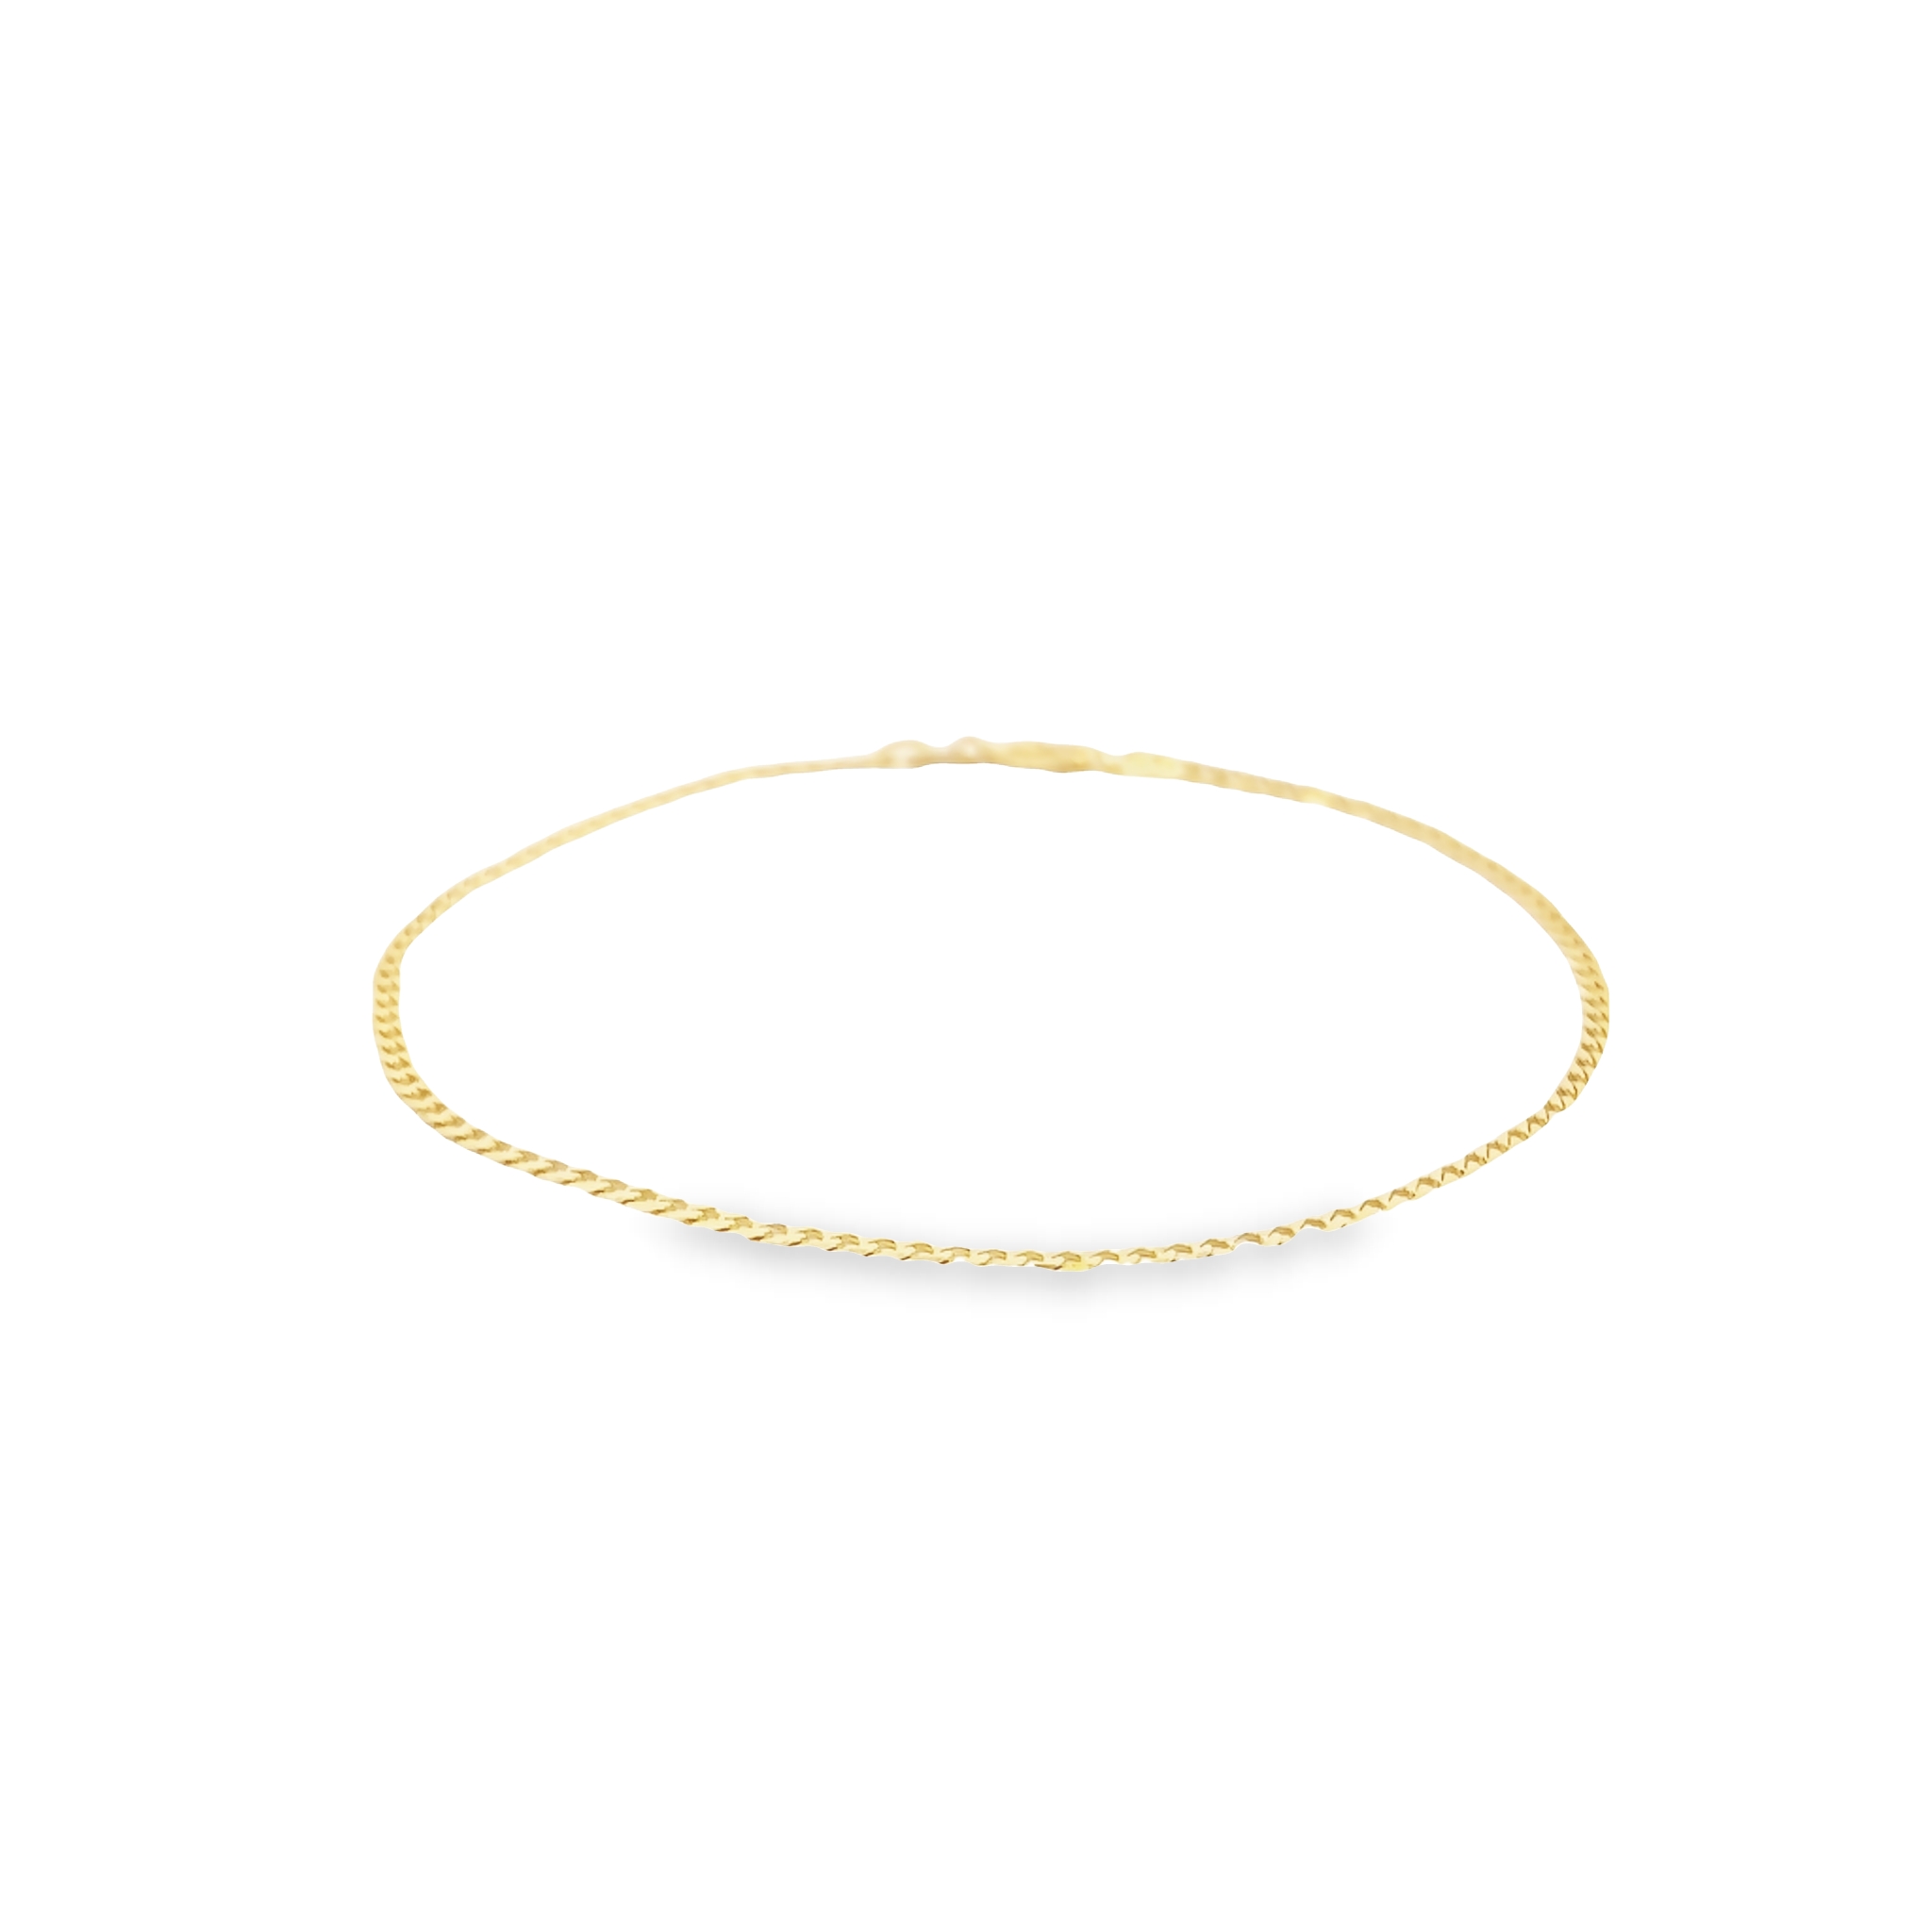 14 karat yellow gold open curb bracelet. Length 7.25in